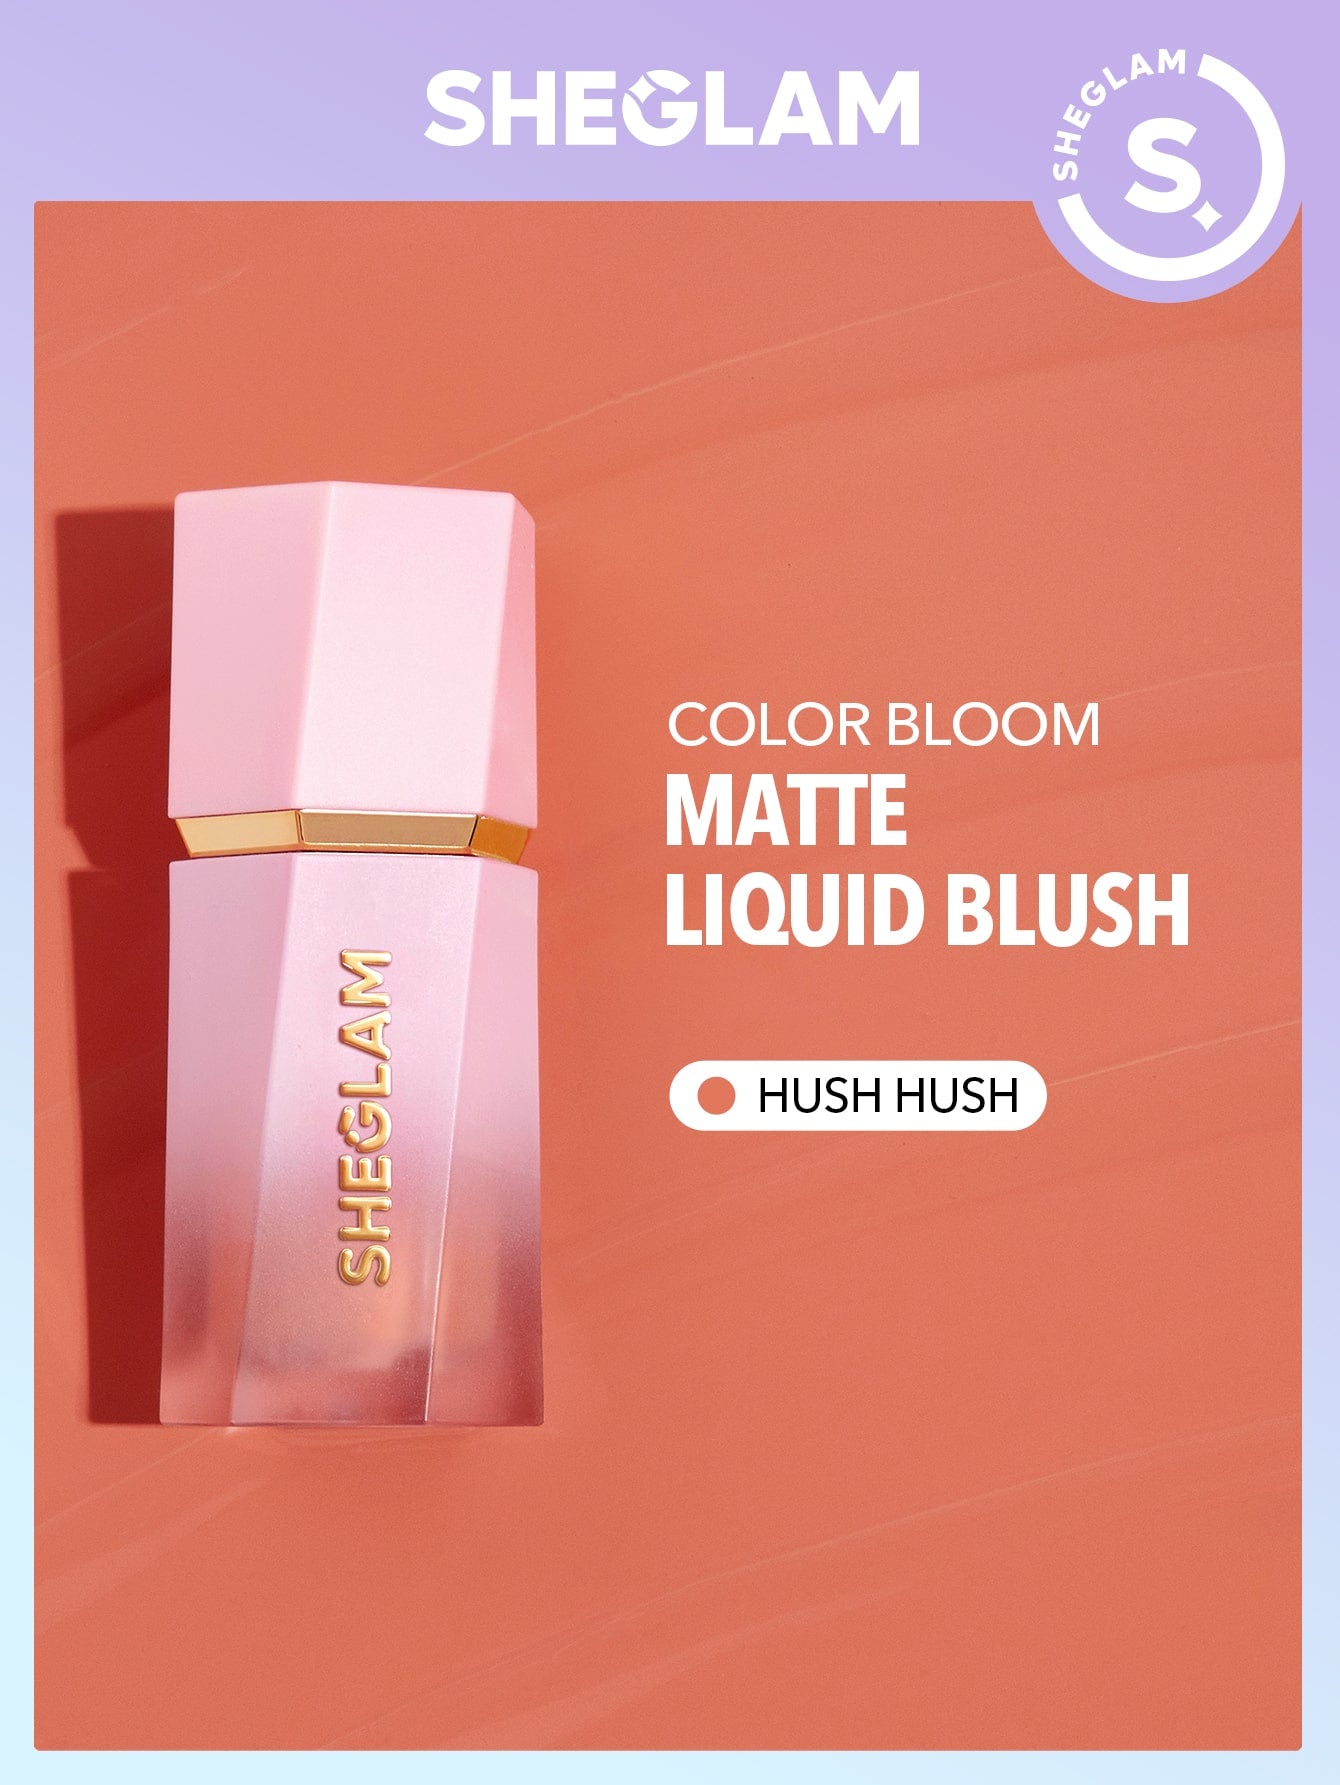 SHEGLAM Color Bloom Liquid Blush Matte Finish Float On